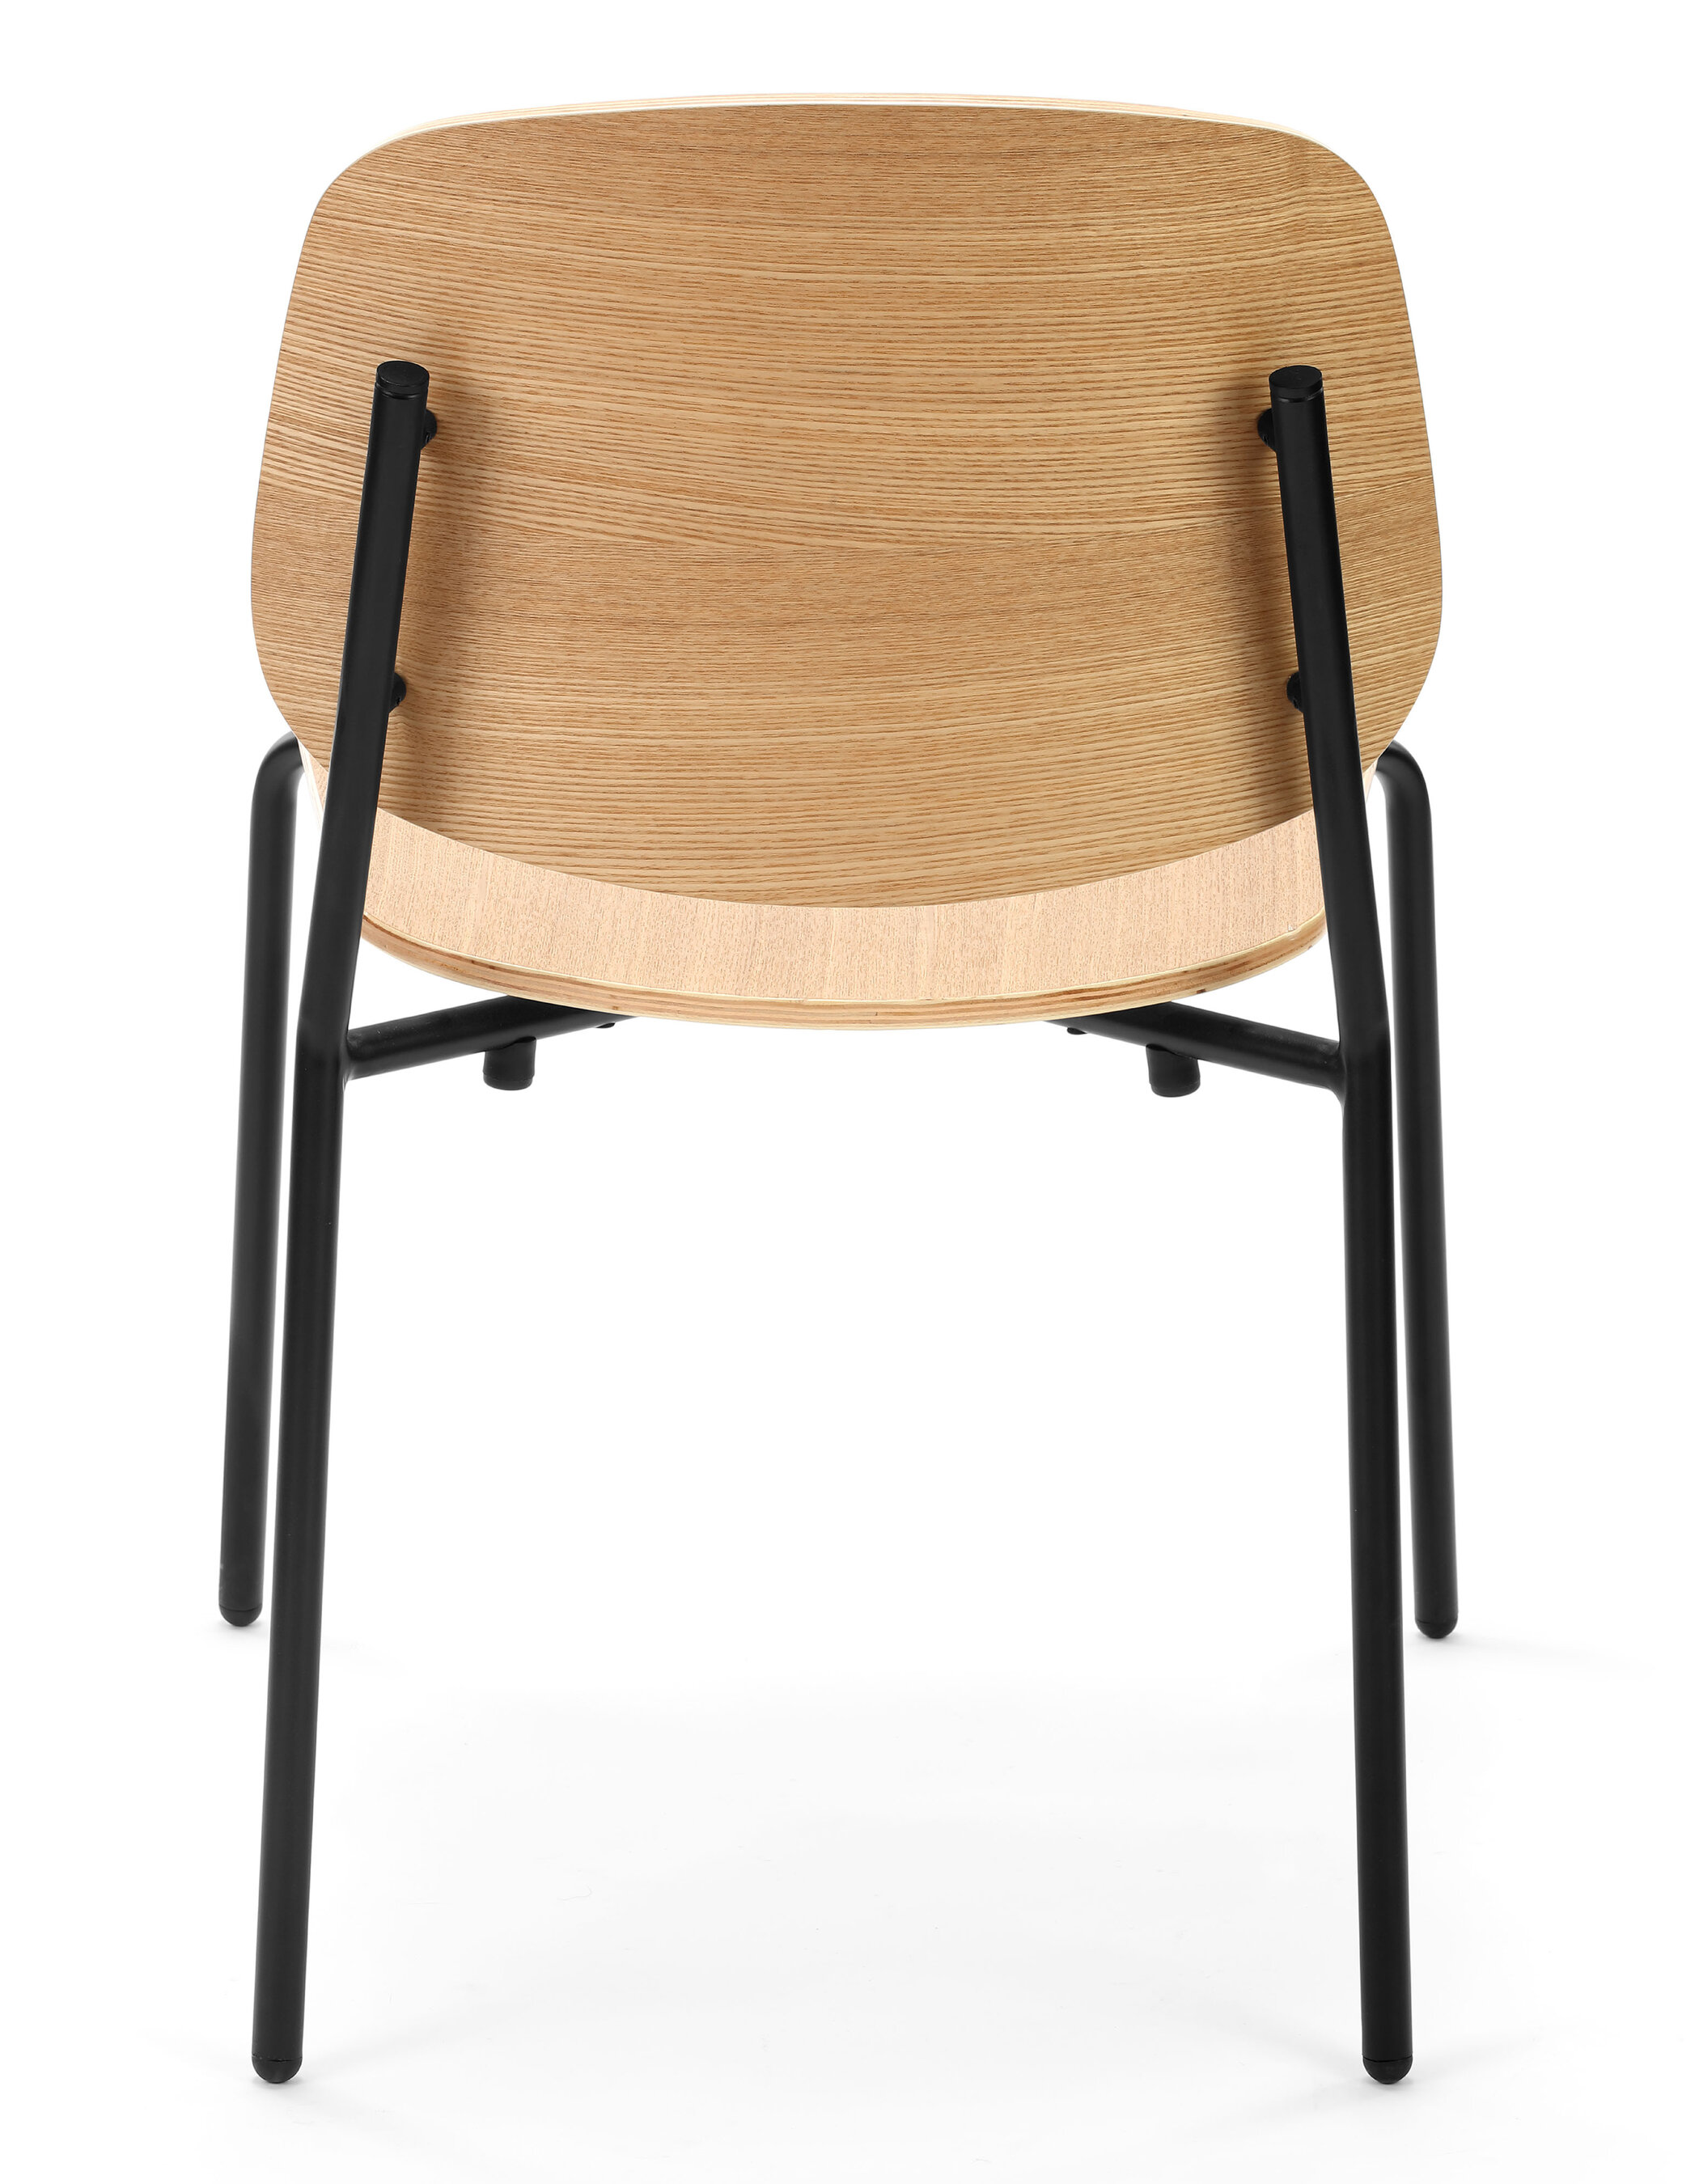 WS - Platform chair - Natural ash (Back)